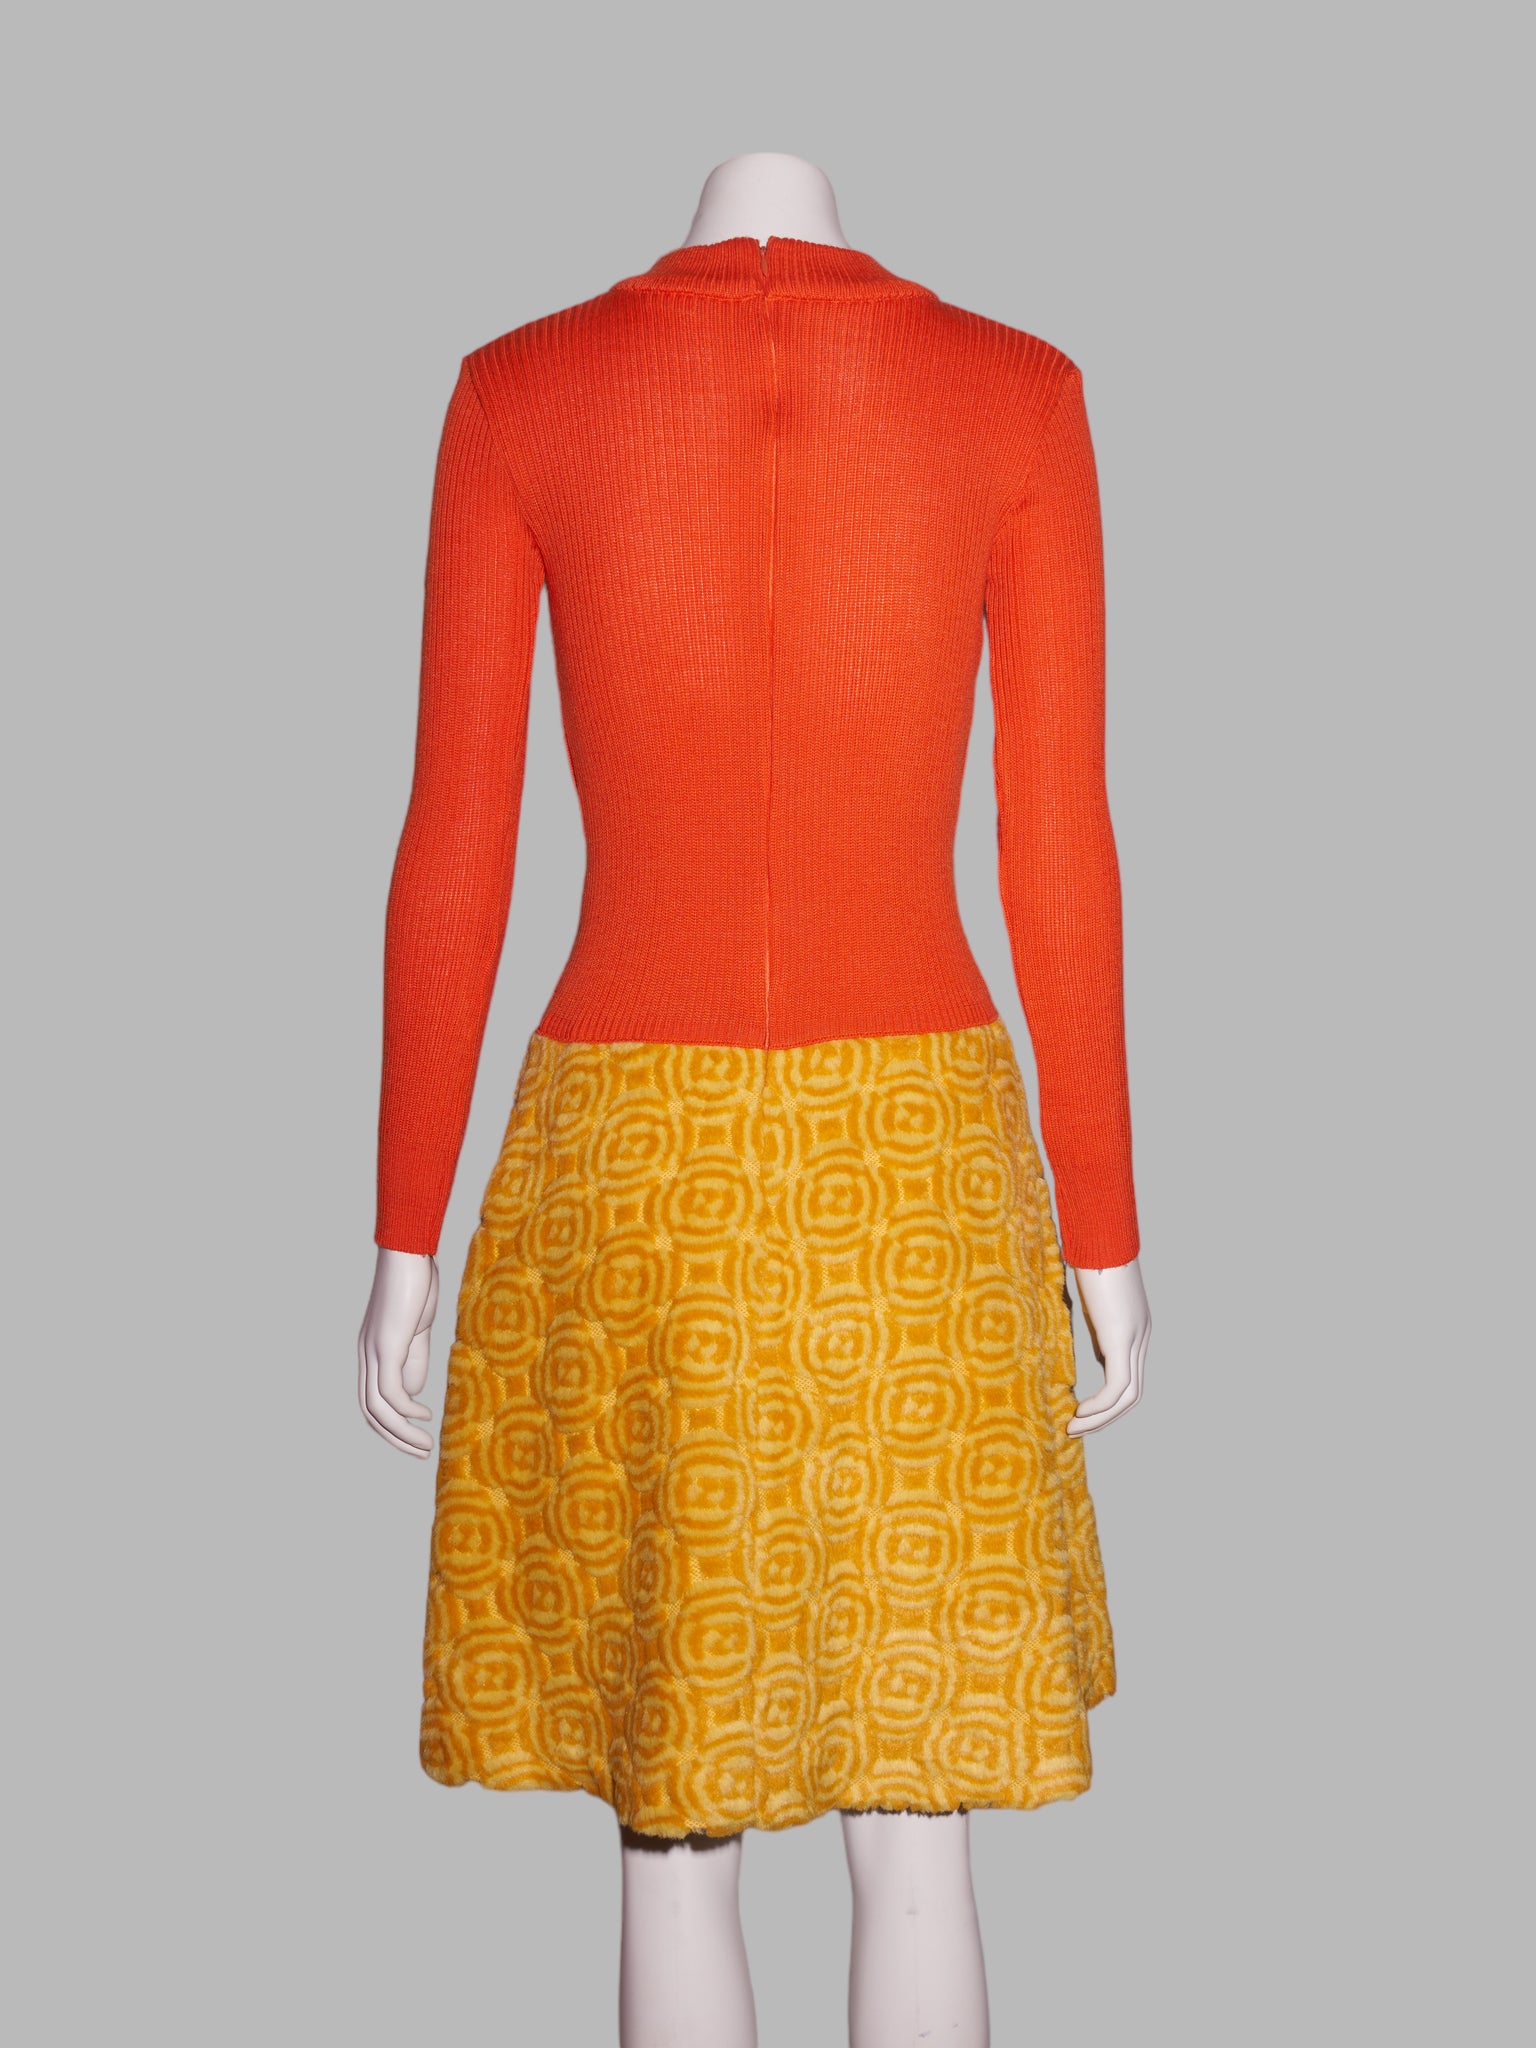 No Concept but Good Sense Yoichi Nagasawa 1990s orange yellow multi fabric dress